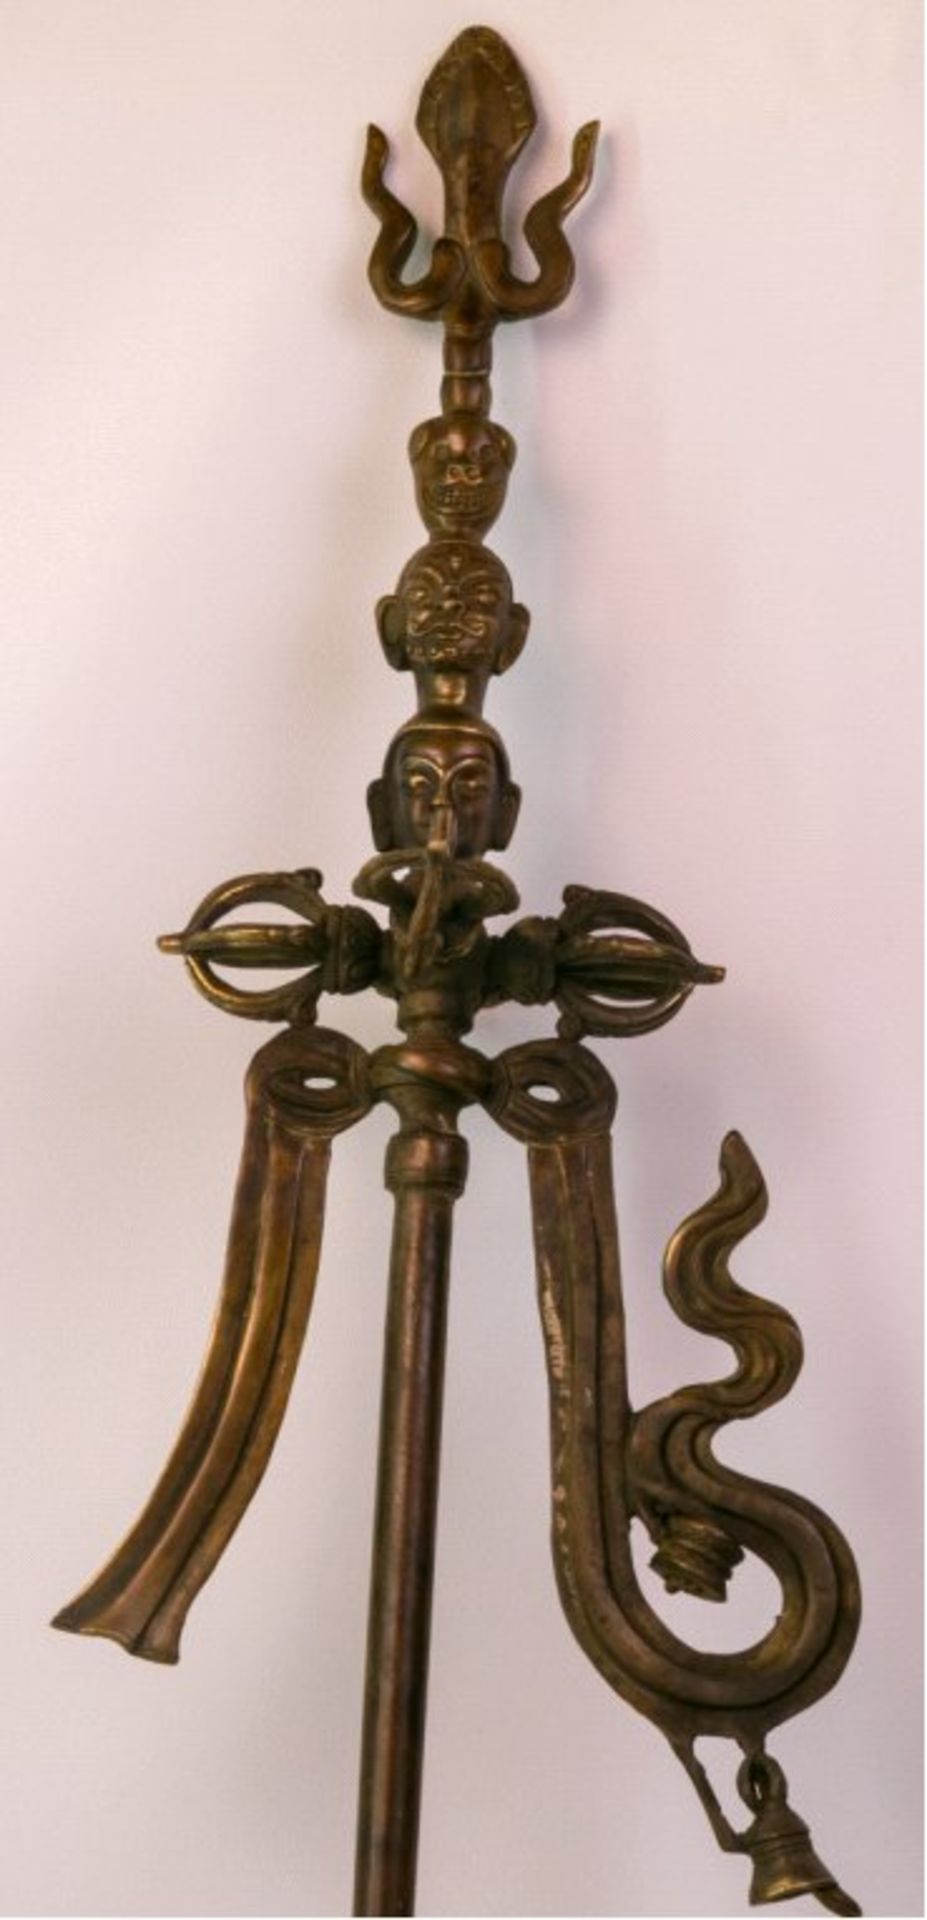 Magischer Zepterstab (Khatvanga).Tibet oder Mongolei 18./19. Jh. Bronzestab, symbolisiertStrafgewalt - Bild 3 aus 5